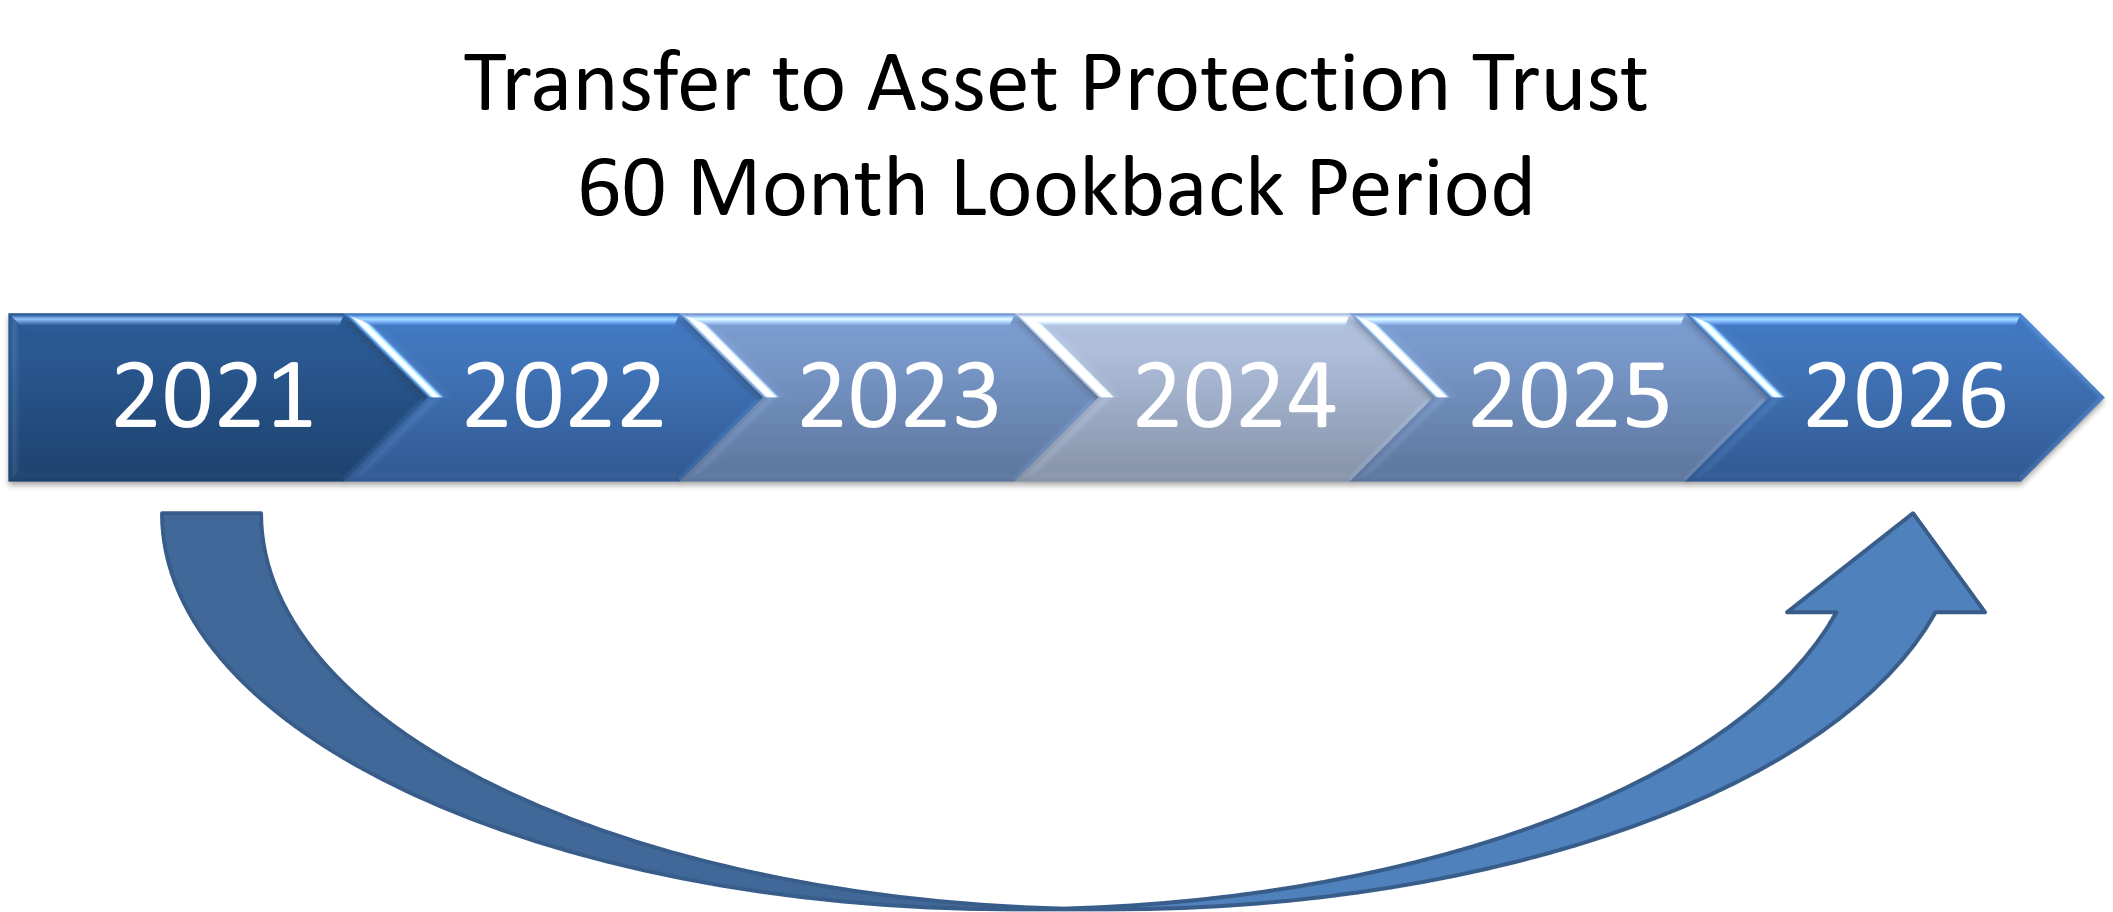 2021 medicaid lookback period